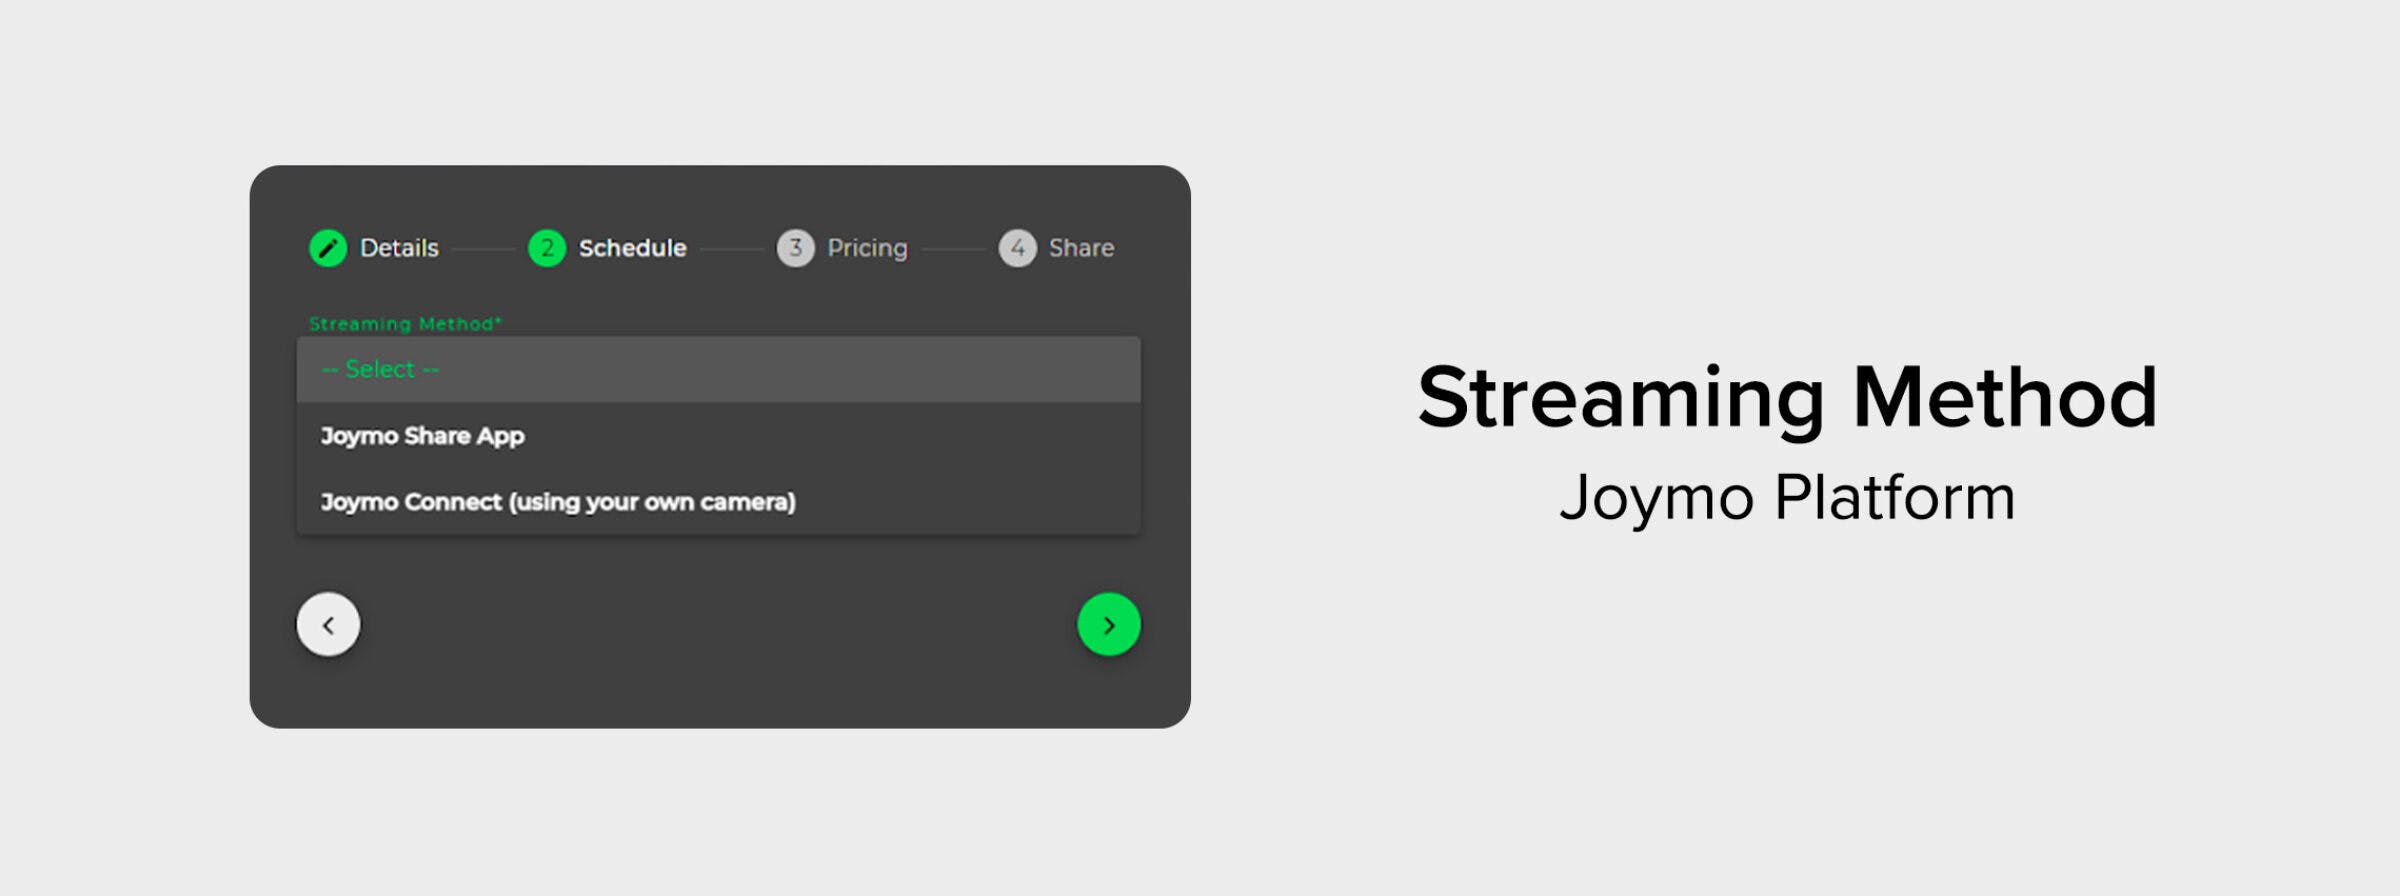 Joymo streaming method 2